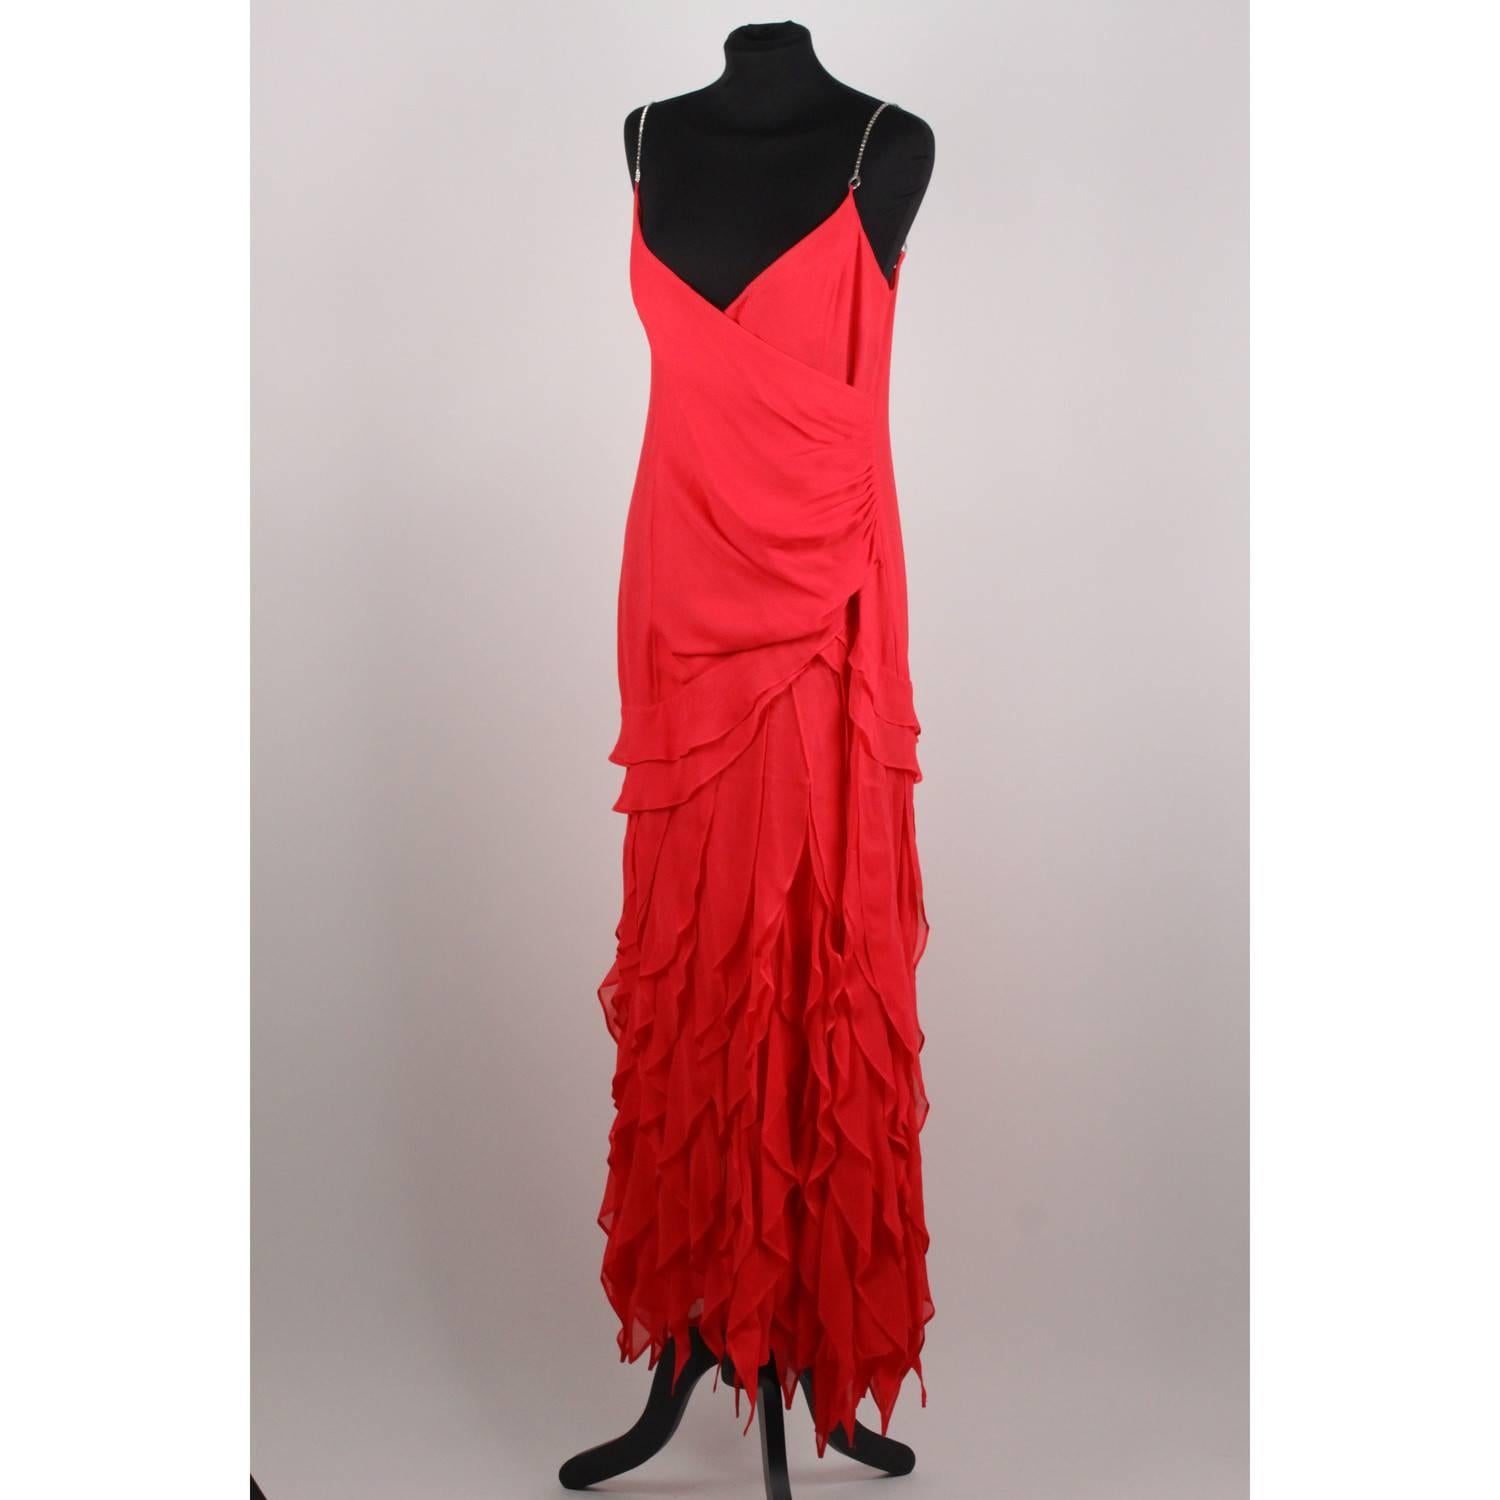 Women's Gai Mattiolo Magenta Ruffled Silky Dress with Rhinestones Size 44